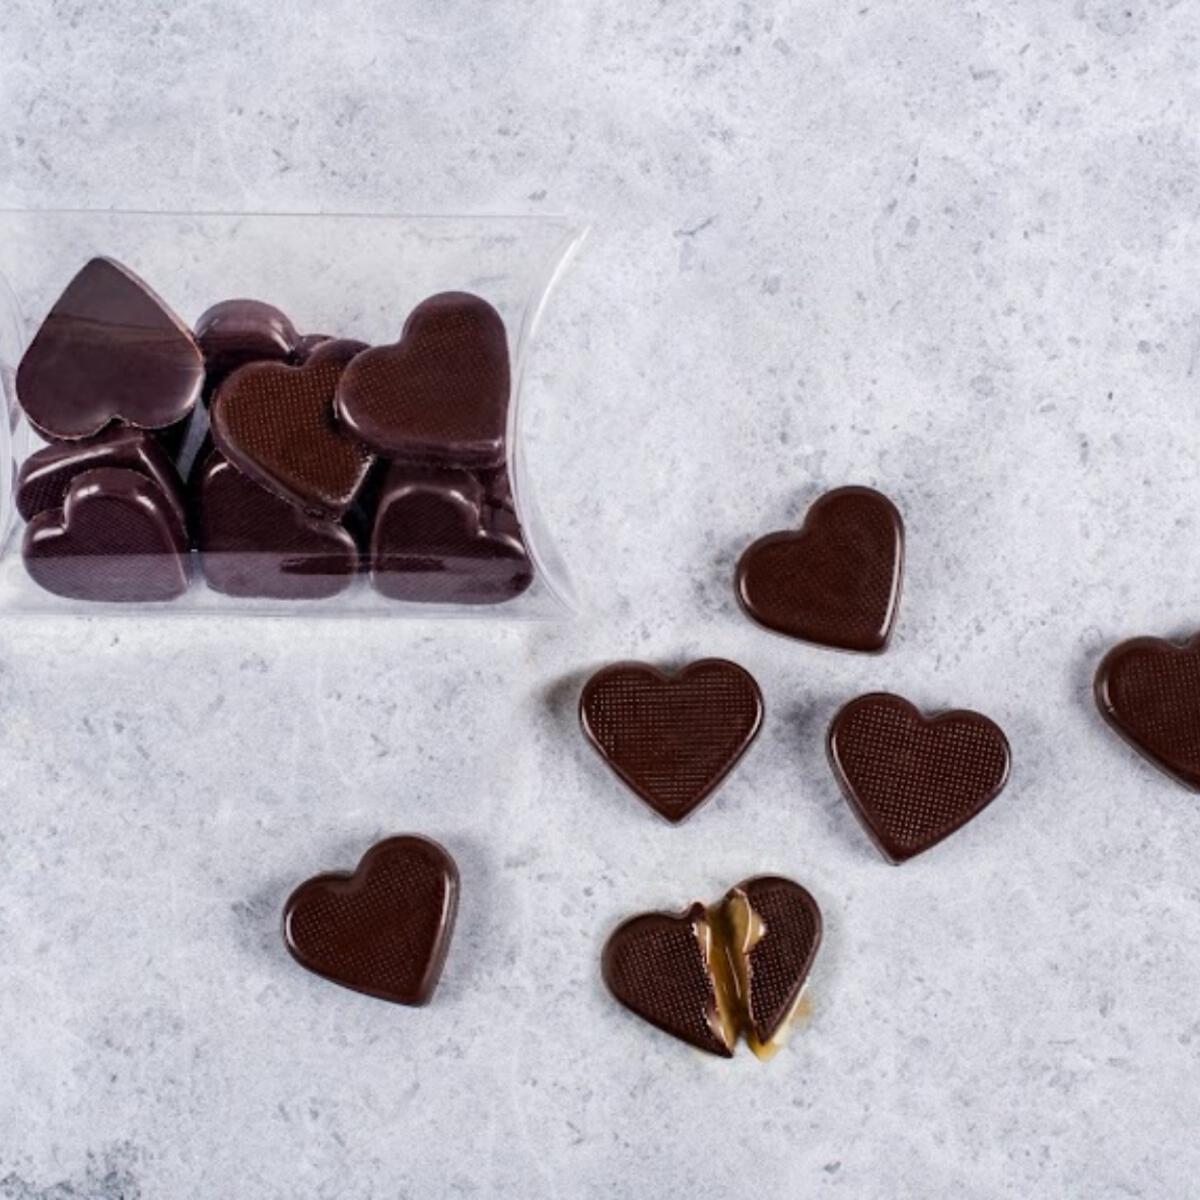 Tube St Valentin, chocolat, coeur - Chocolate png, heart